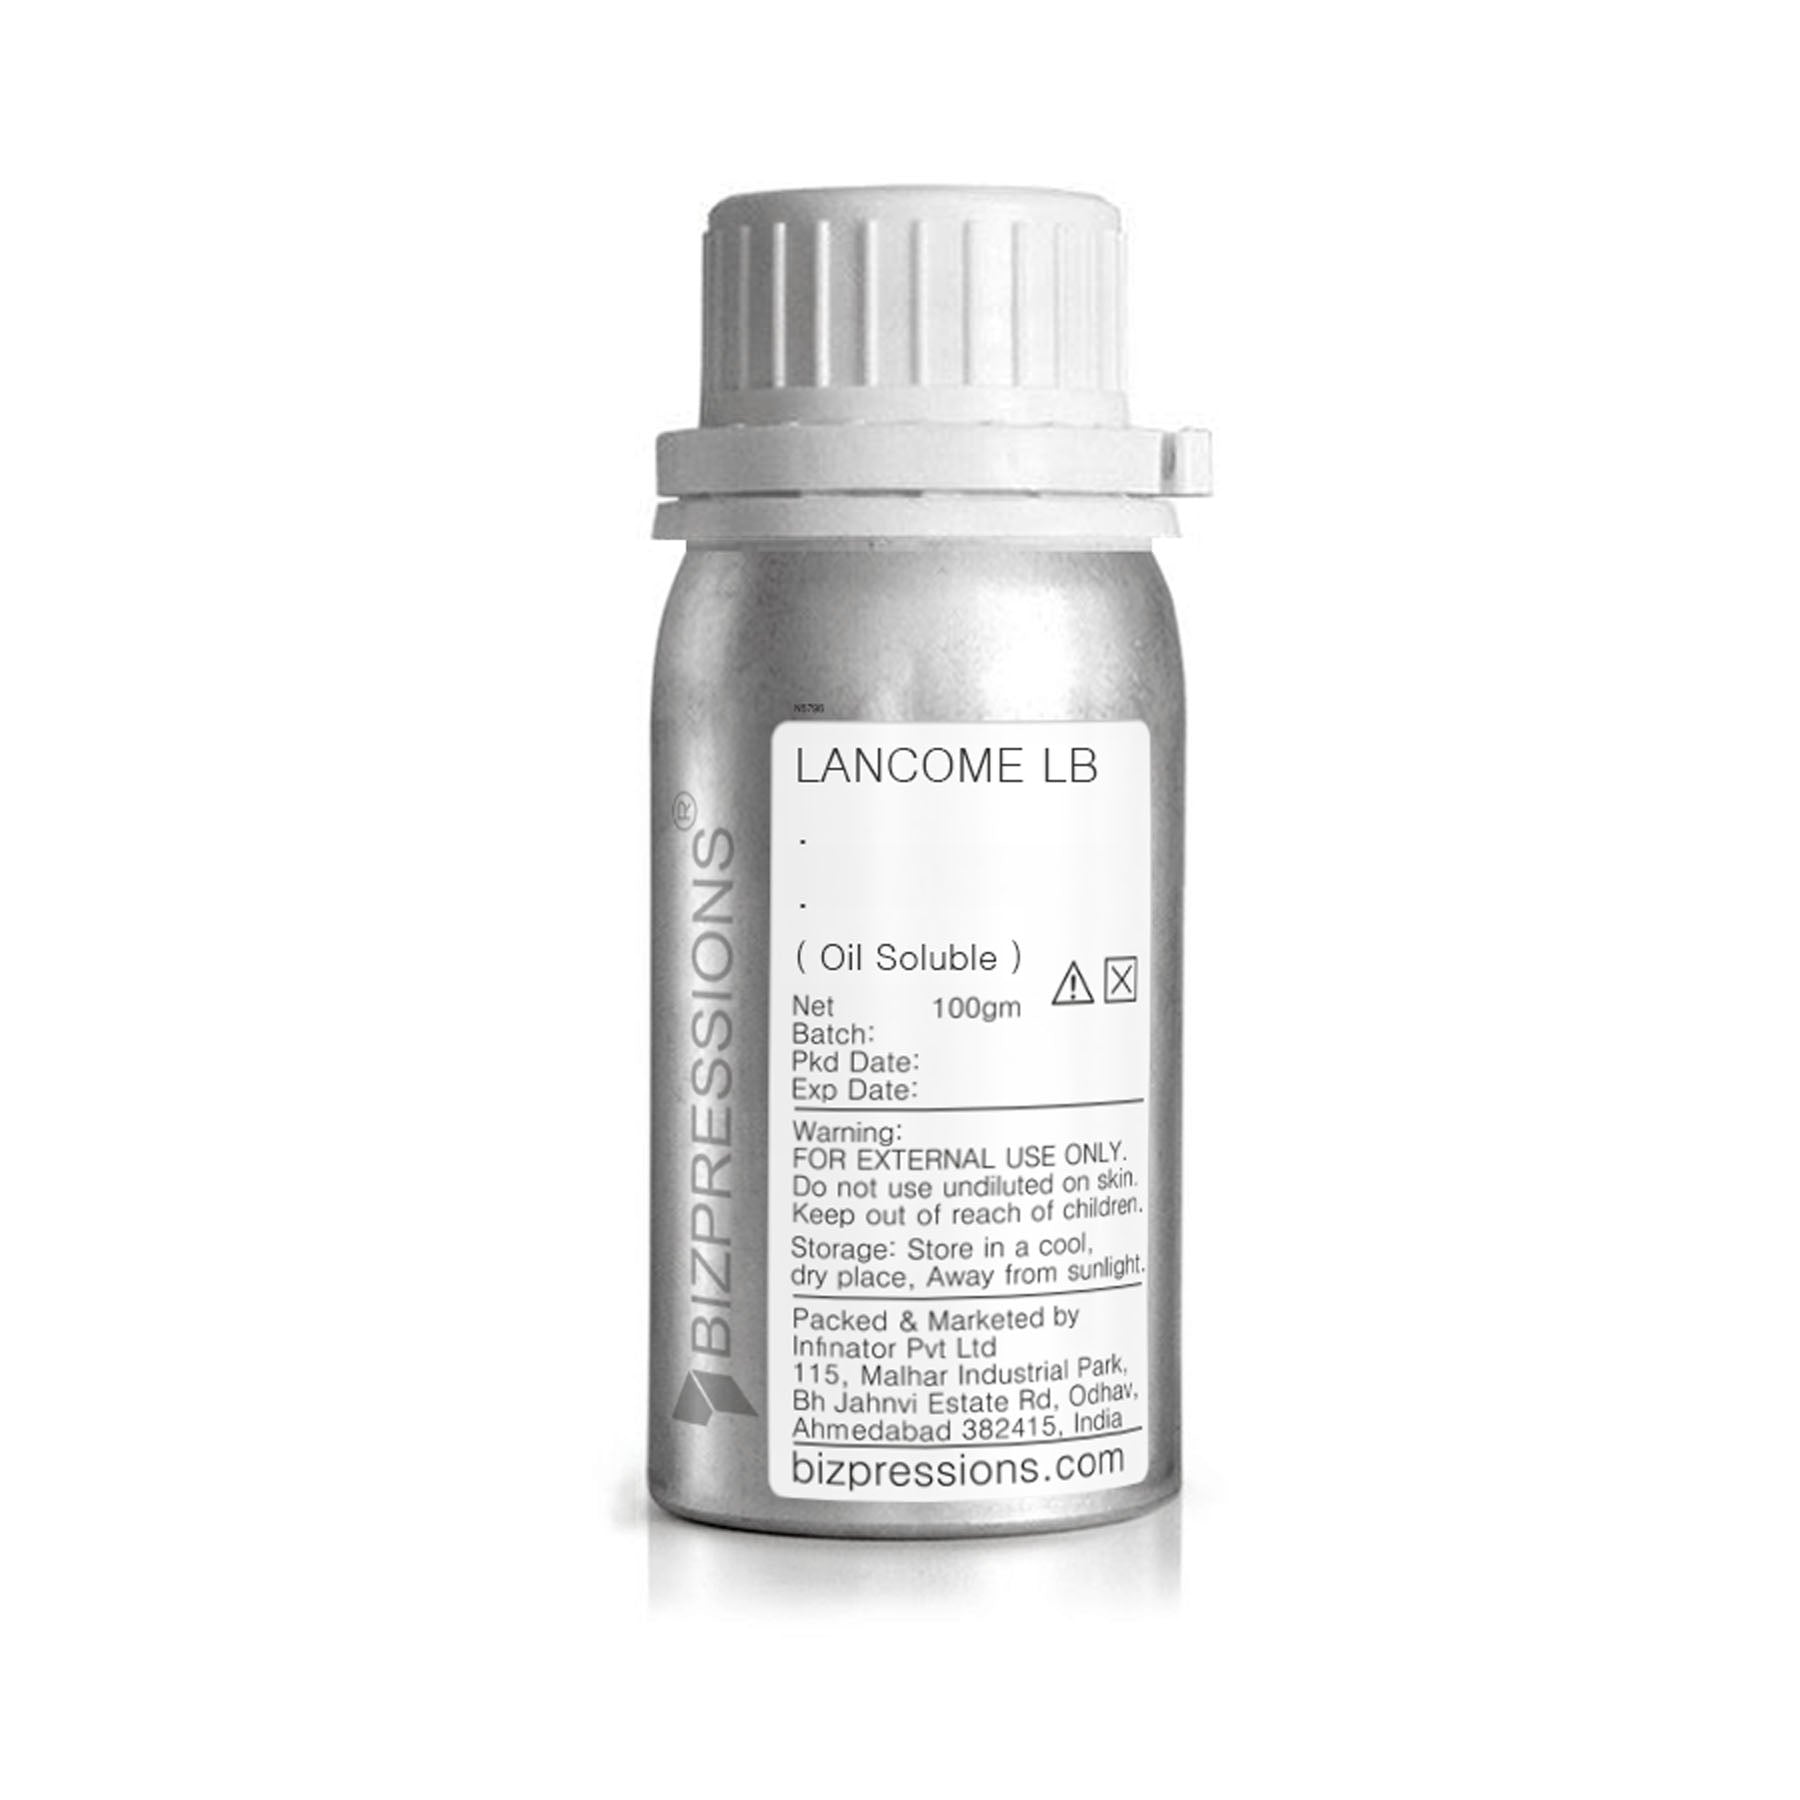 LANCOME LB - Fragrance ( Oil Soluble ) - 100 gm